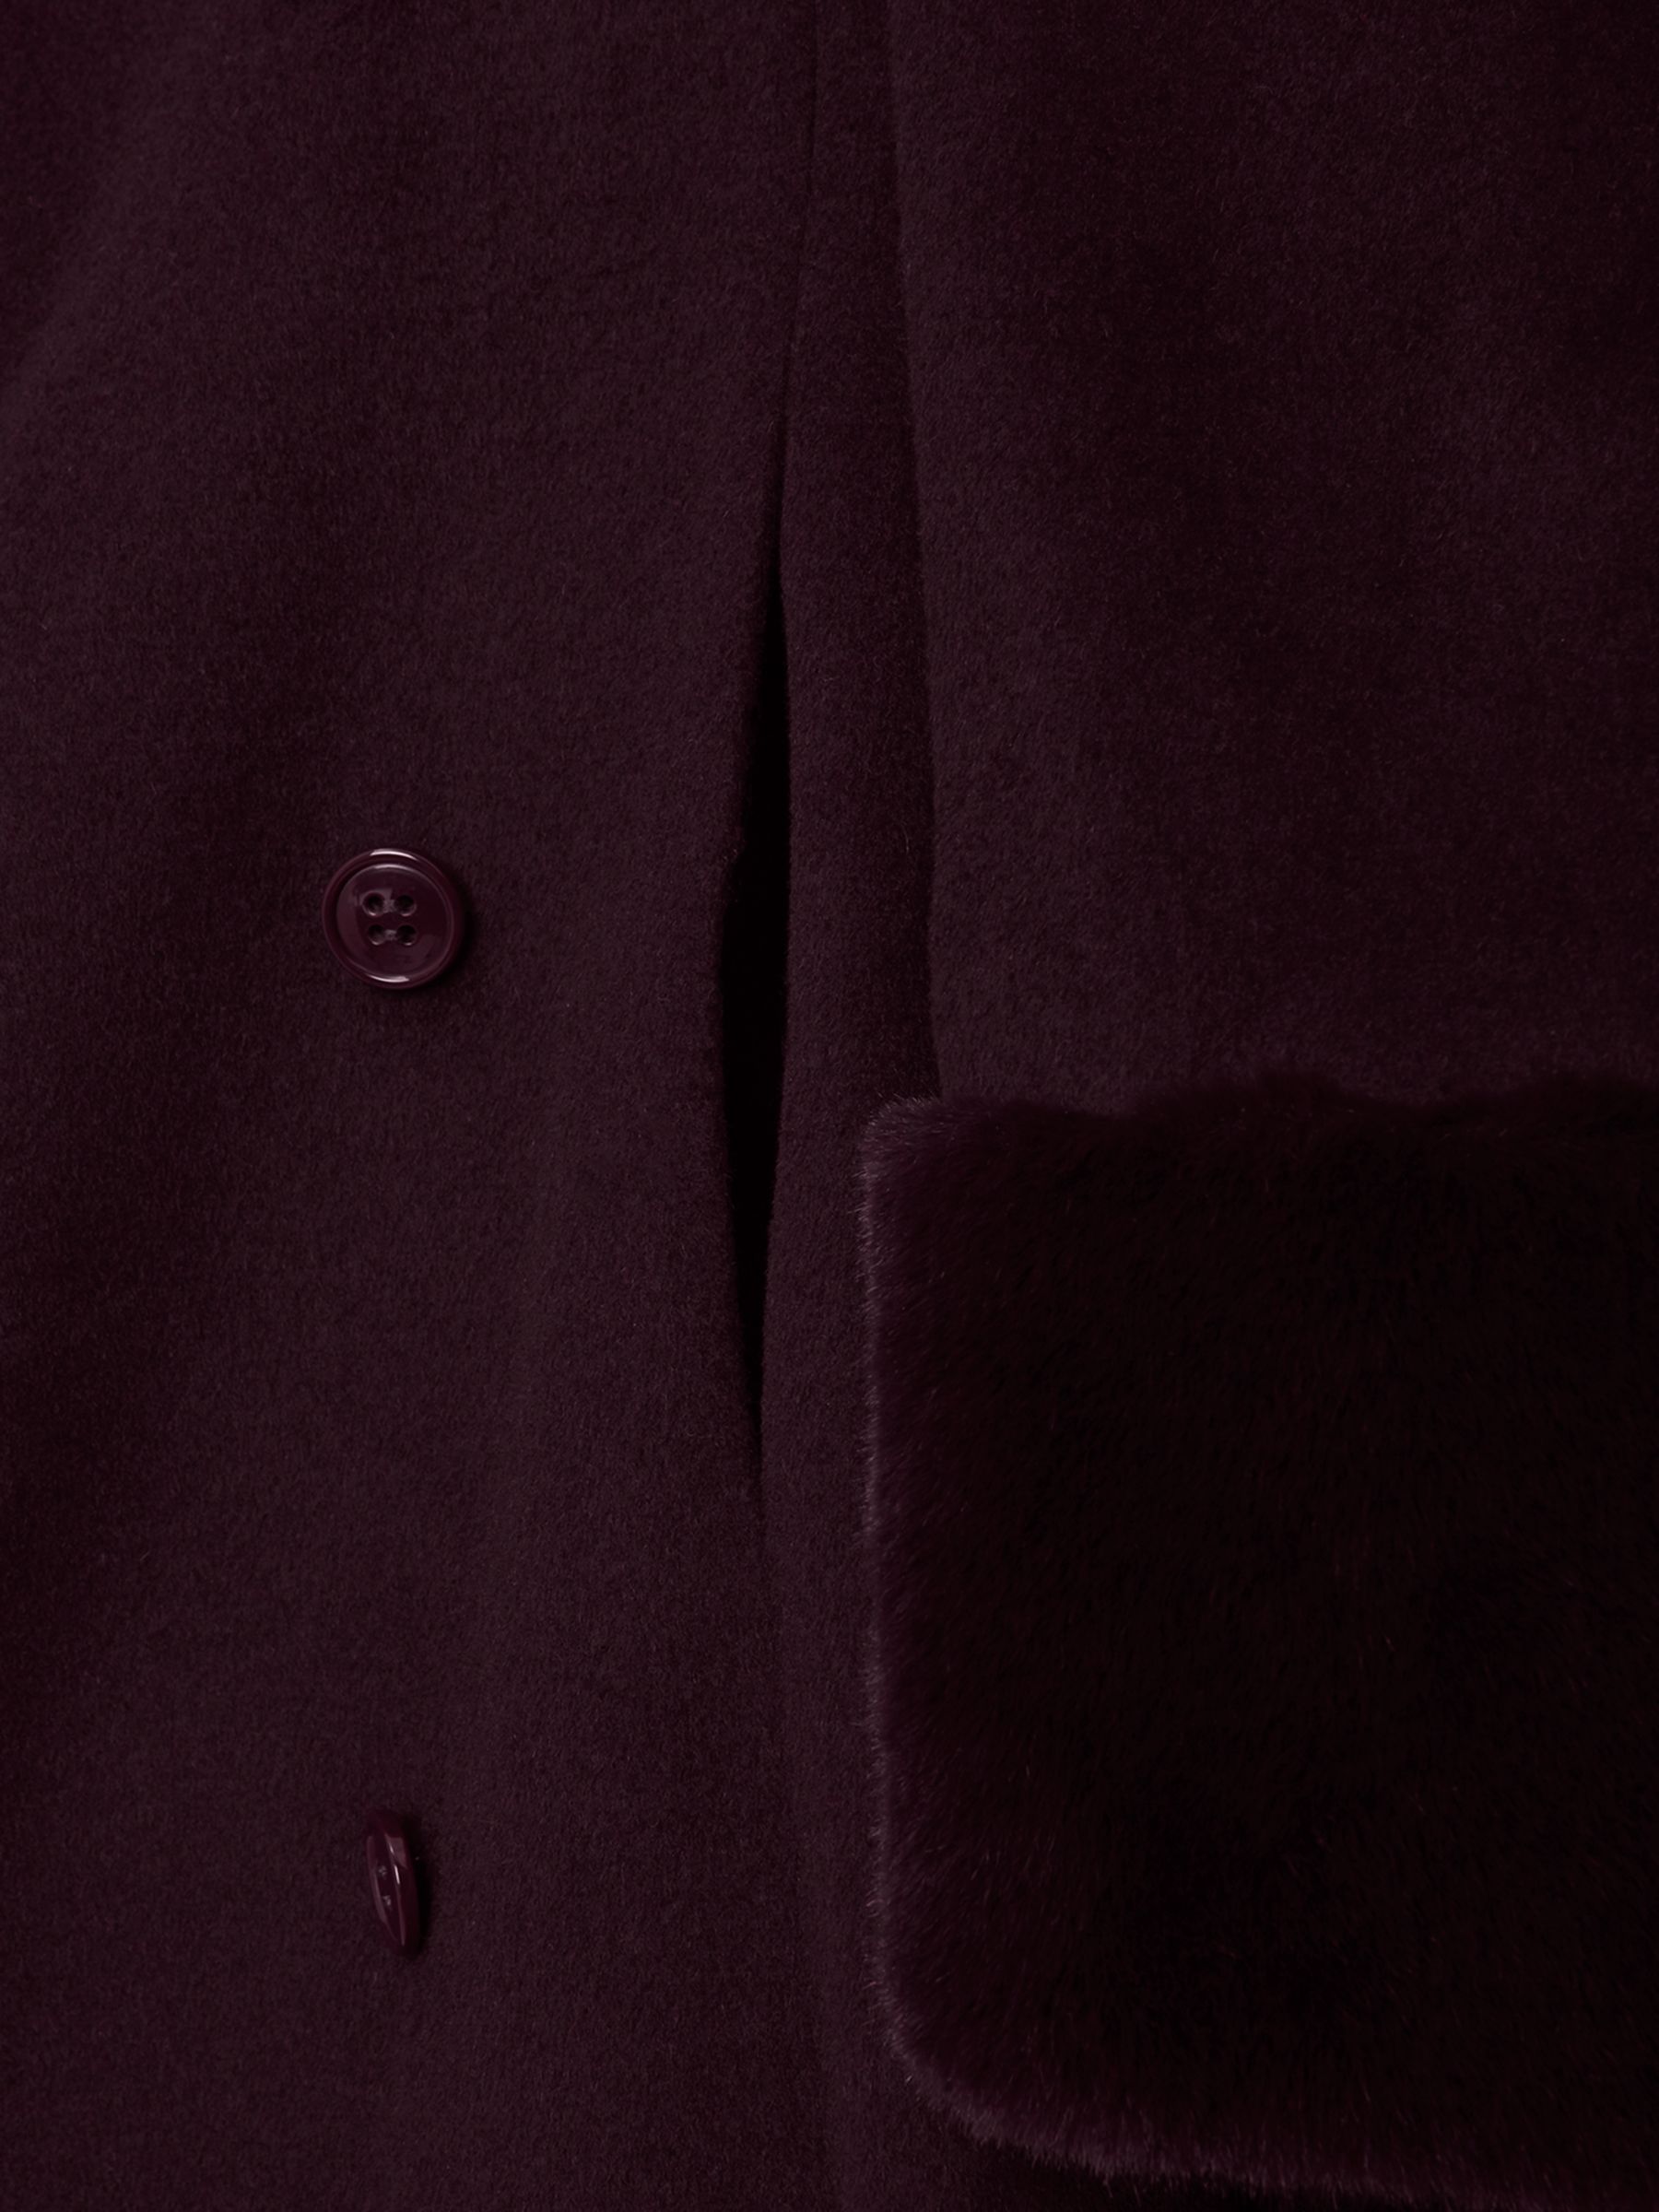 Phase Eight Petite Zylah Wool Blend Faux Fur Collar Smart Coat, Burgundy, 10